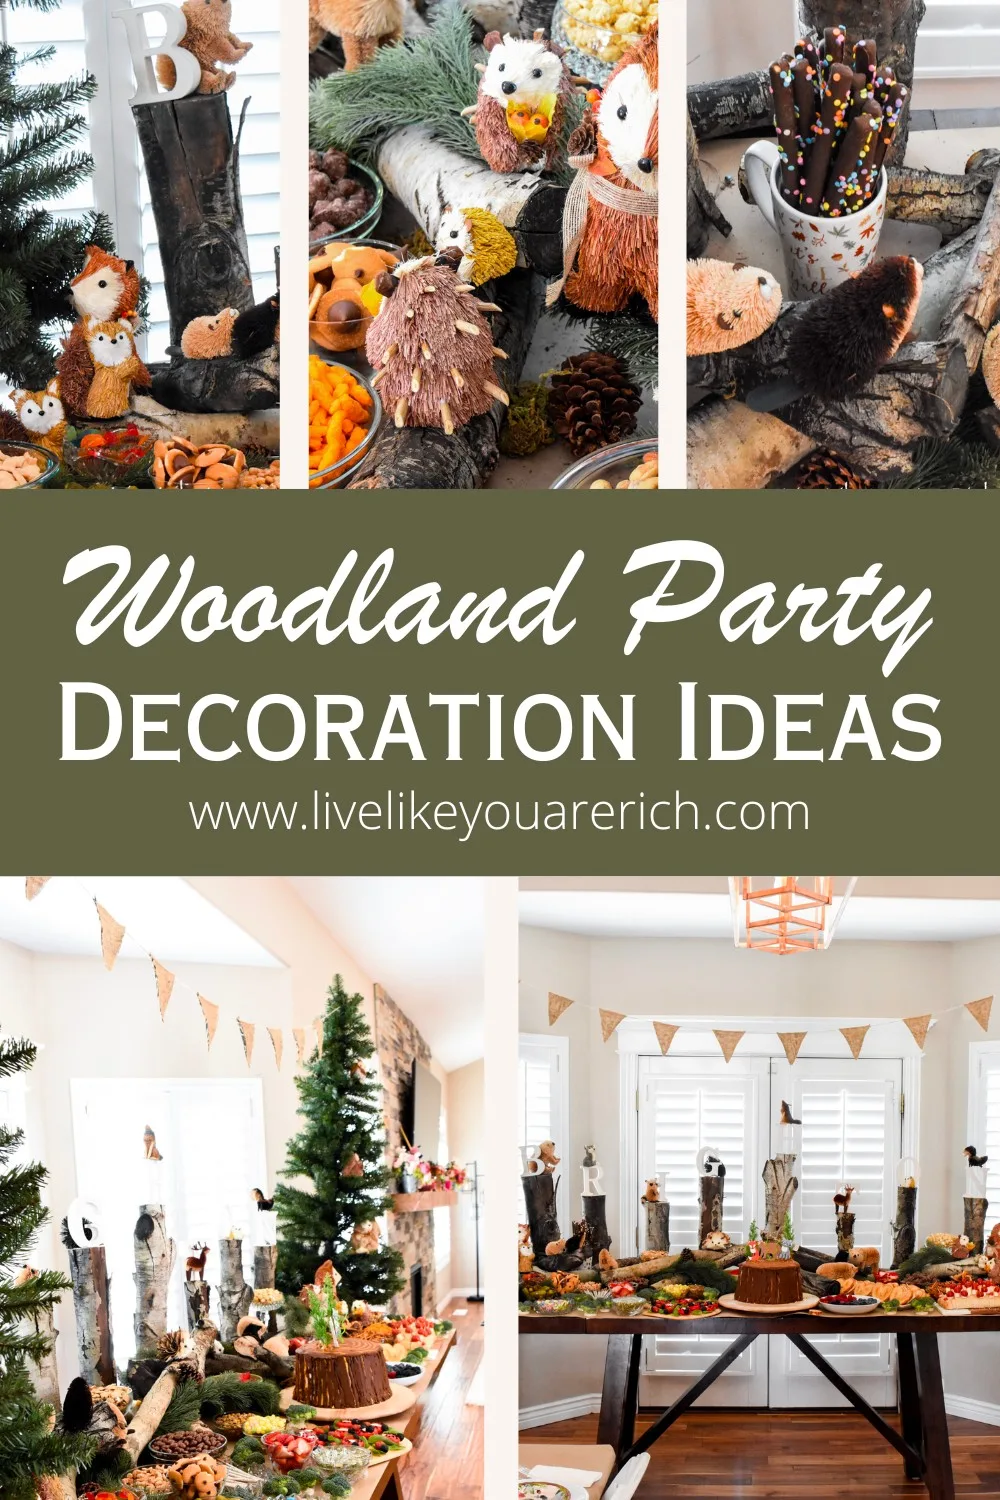 Woodland Party Decoration Ideas